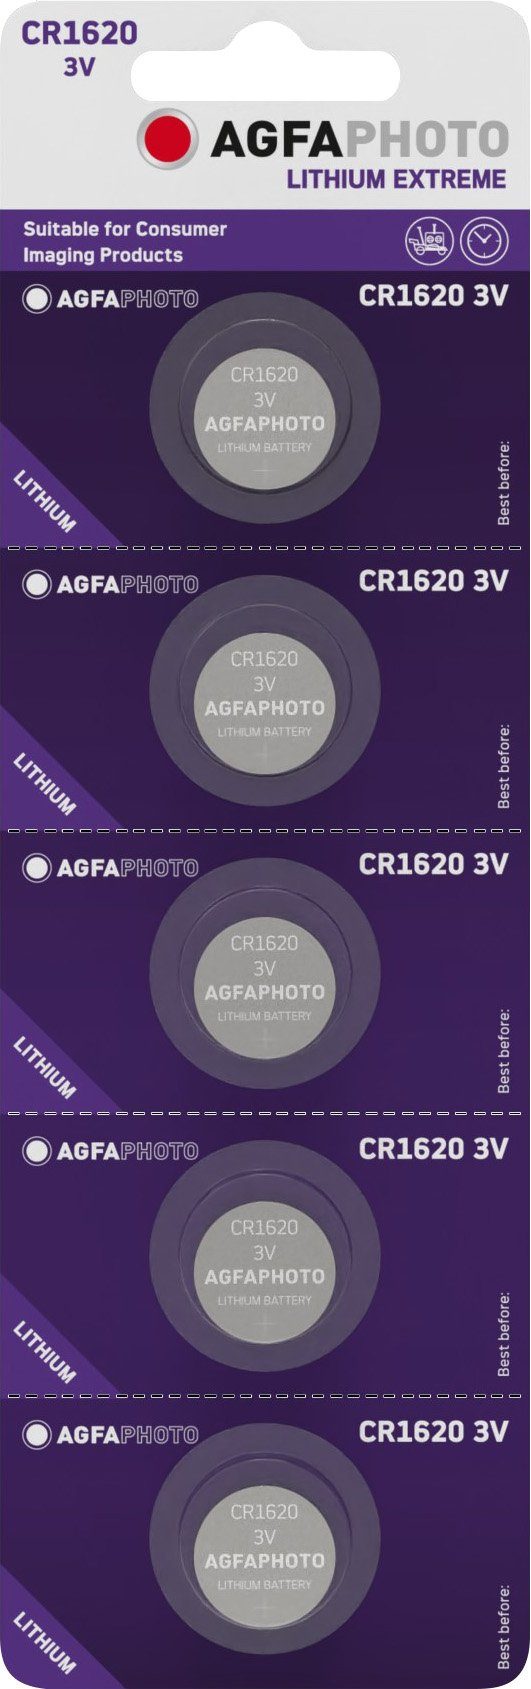 AgfaPhoto Agfaphoto Batterie Lithium, CR1620, 3V Extreme, Knopfzelle Knopfzelle, Bl Retail